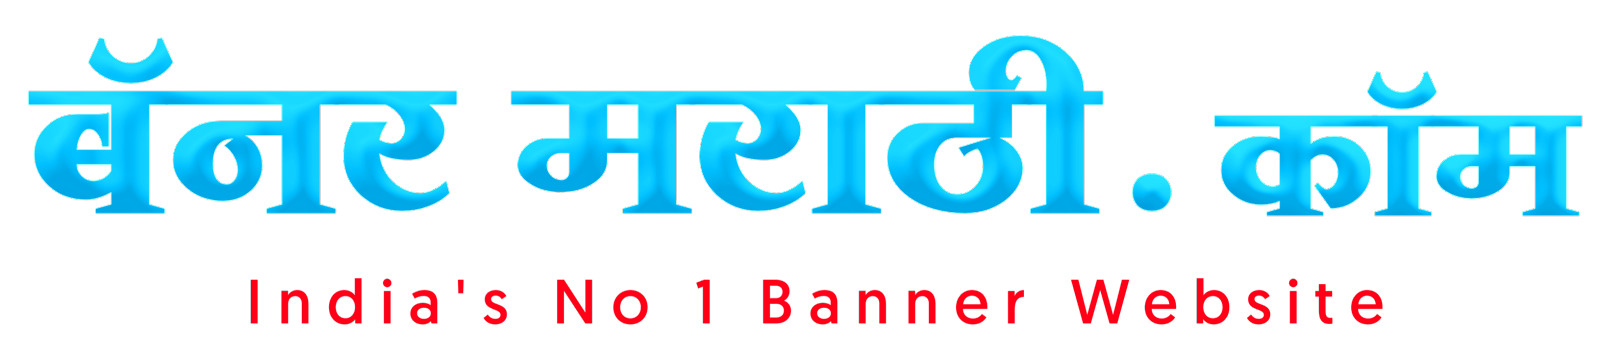 New birthday banner video  birthday banner background video  marathi  status  YouTube